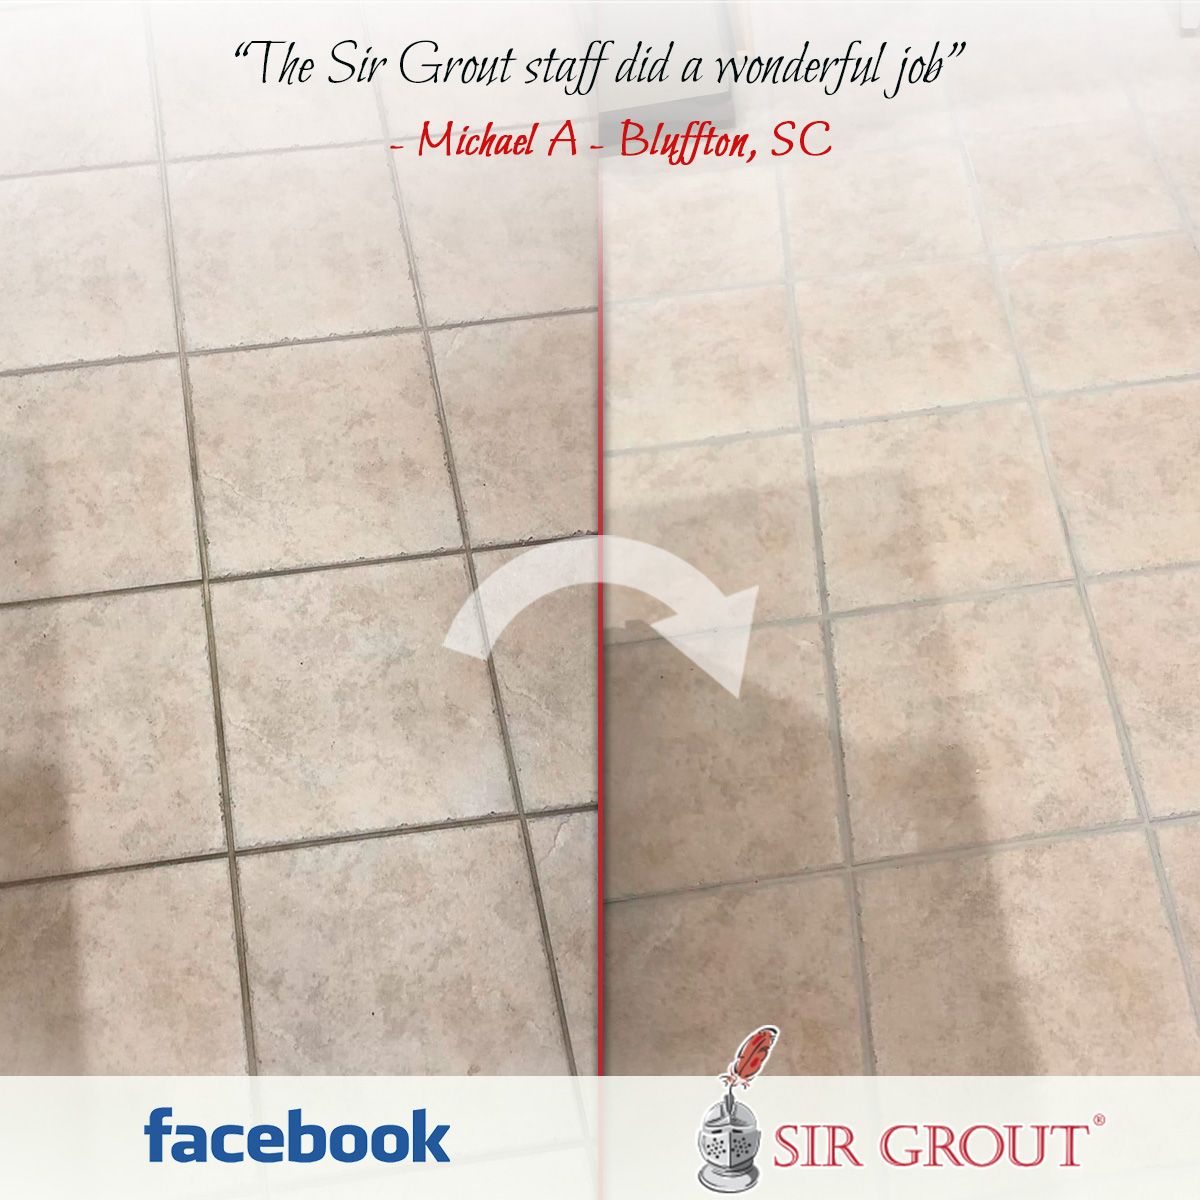 The Sir Grout staff did a wonderful job